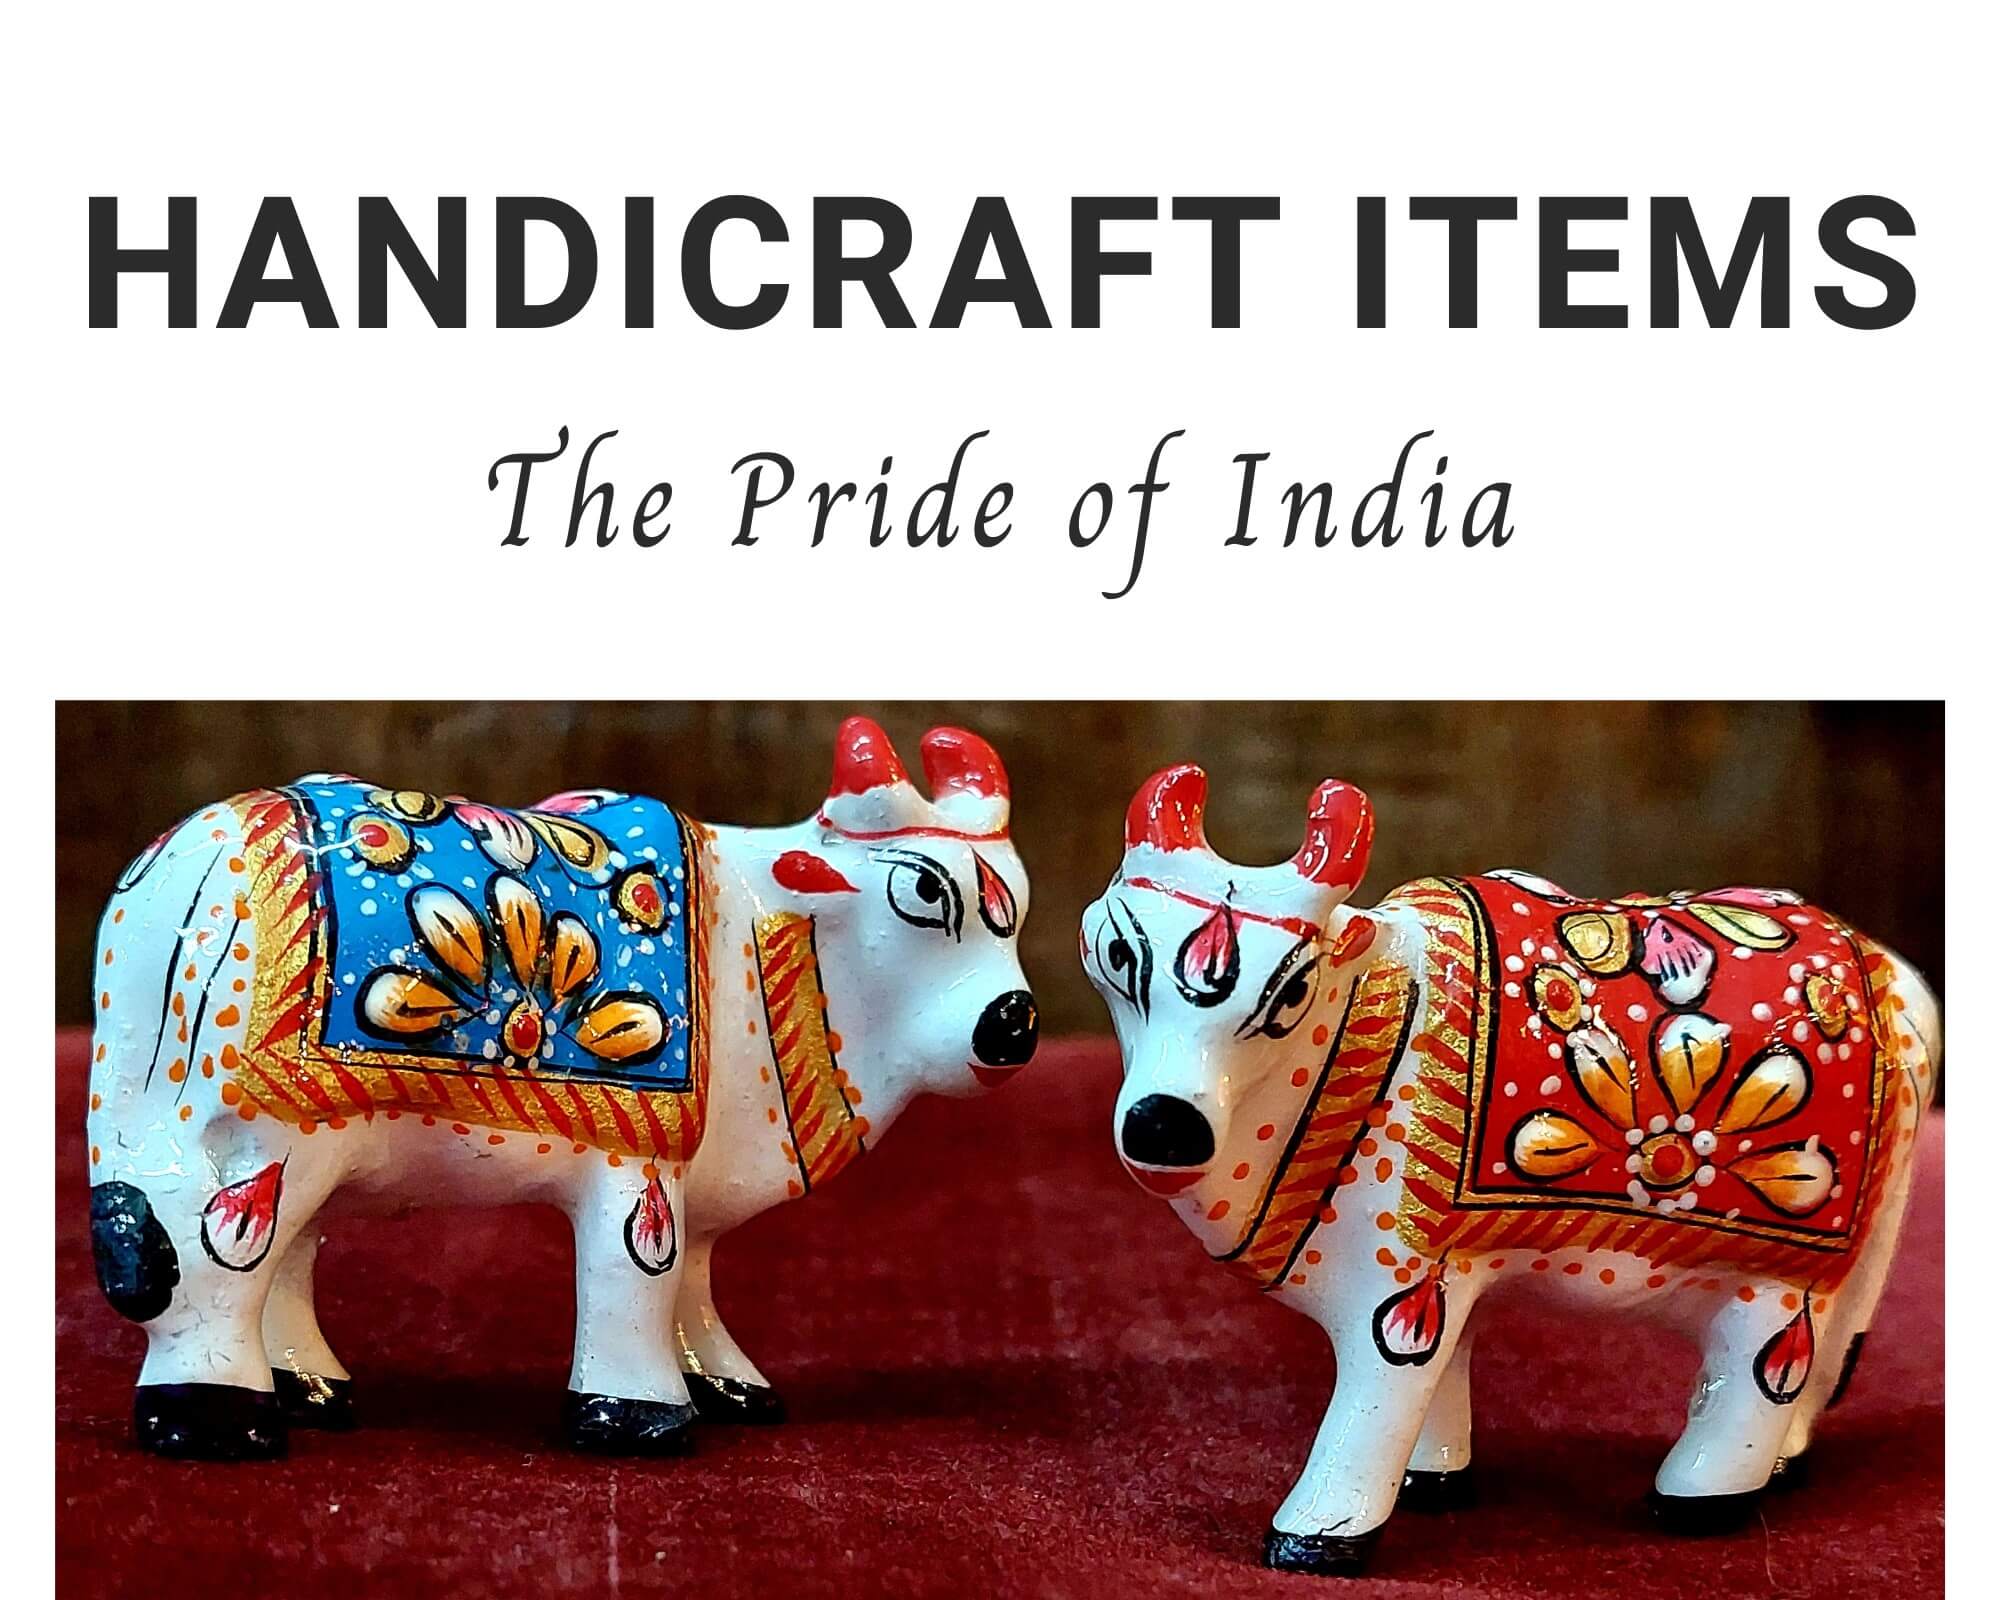 Handicraft items The Pride of India